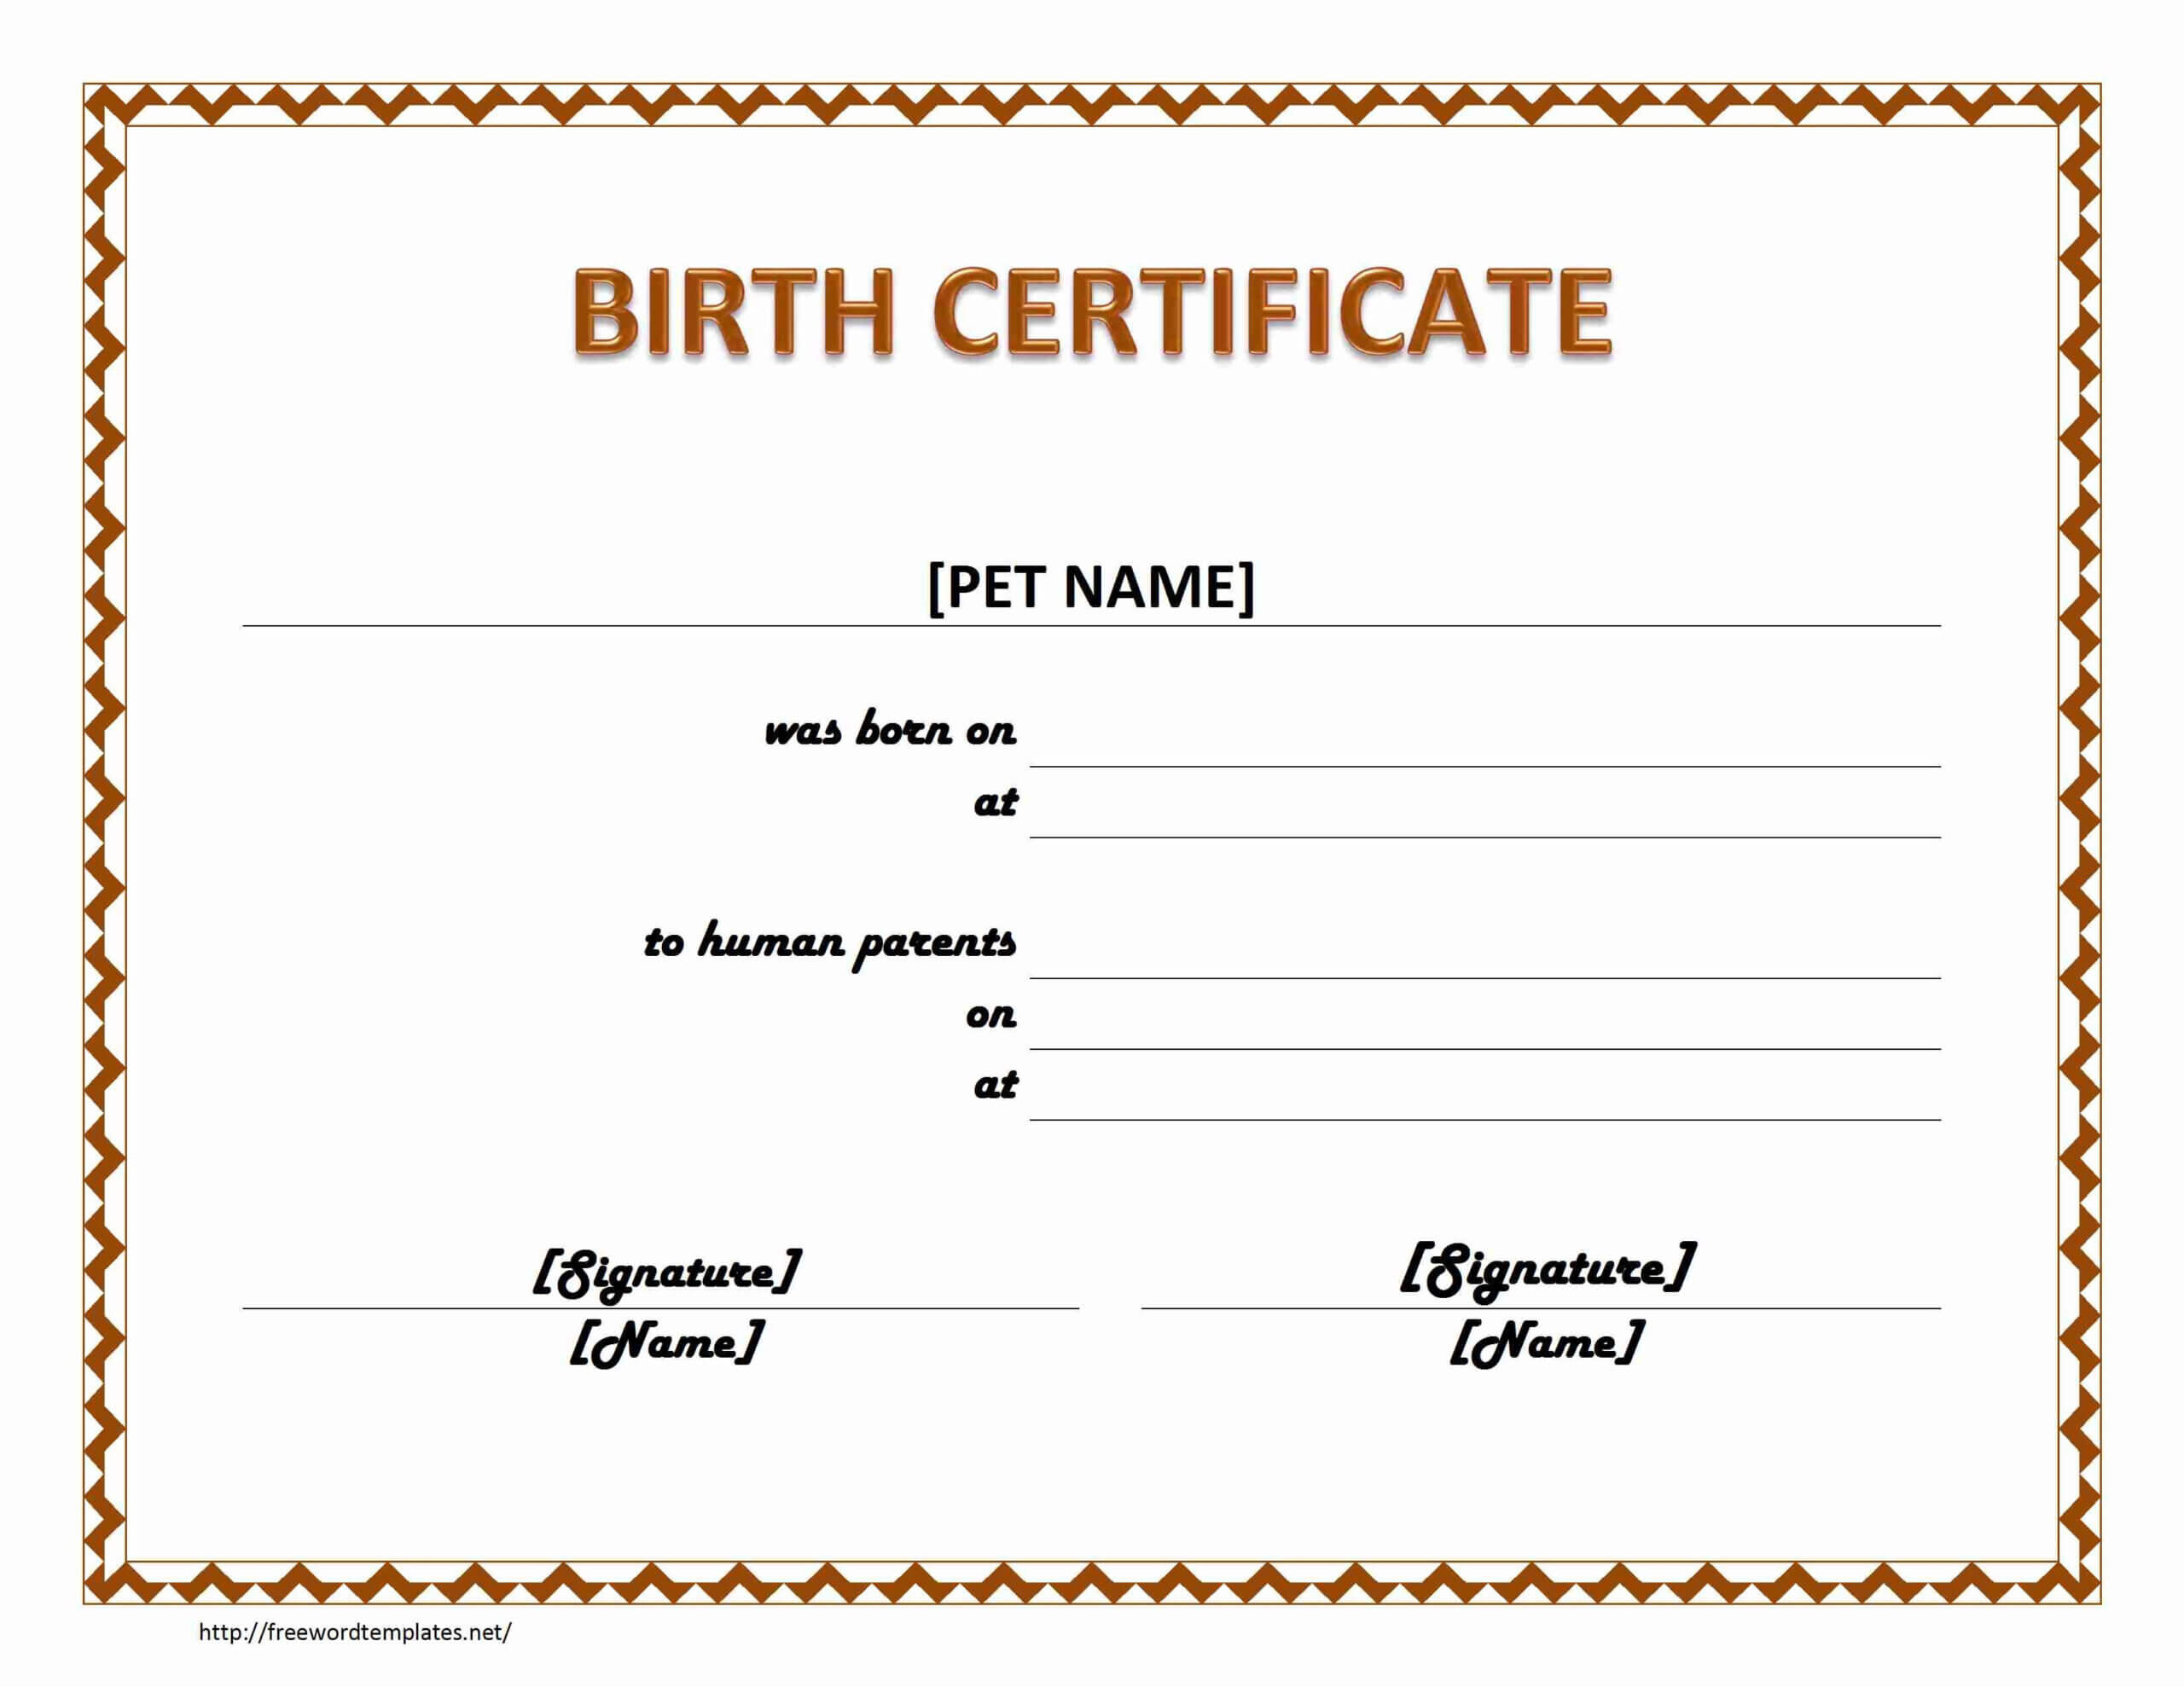 Pet Birth Certificate Maker | Pet Birth Certificate For Word Inside Birth Certificate Templates For Word